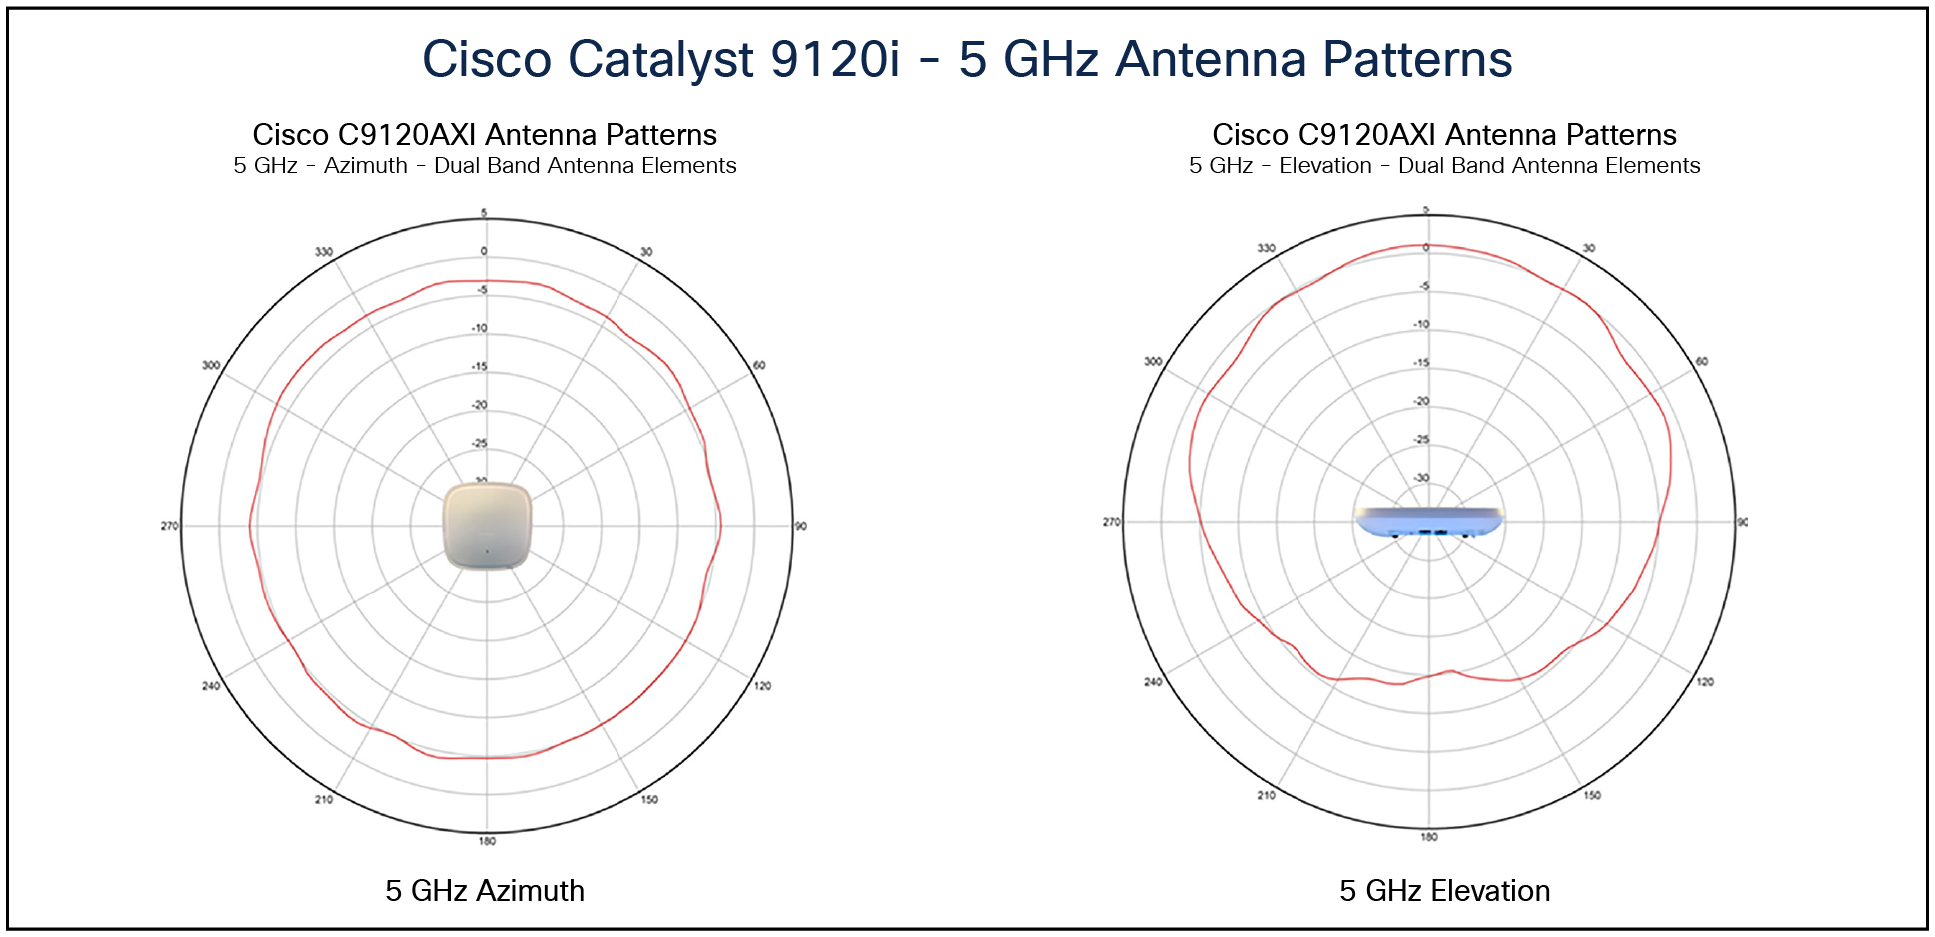 9120i 5-GHz antenna patterns